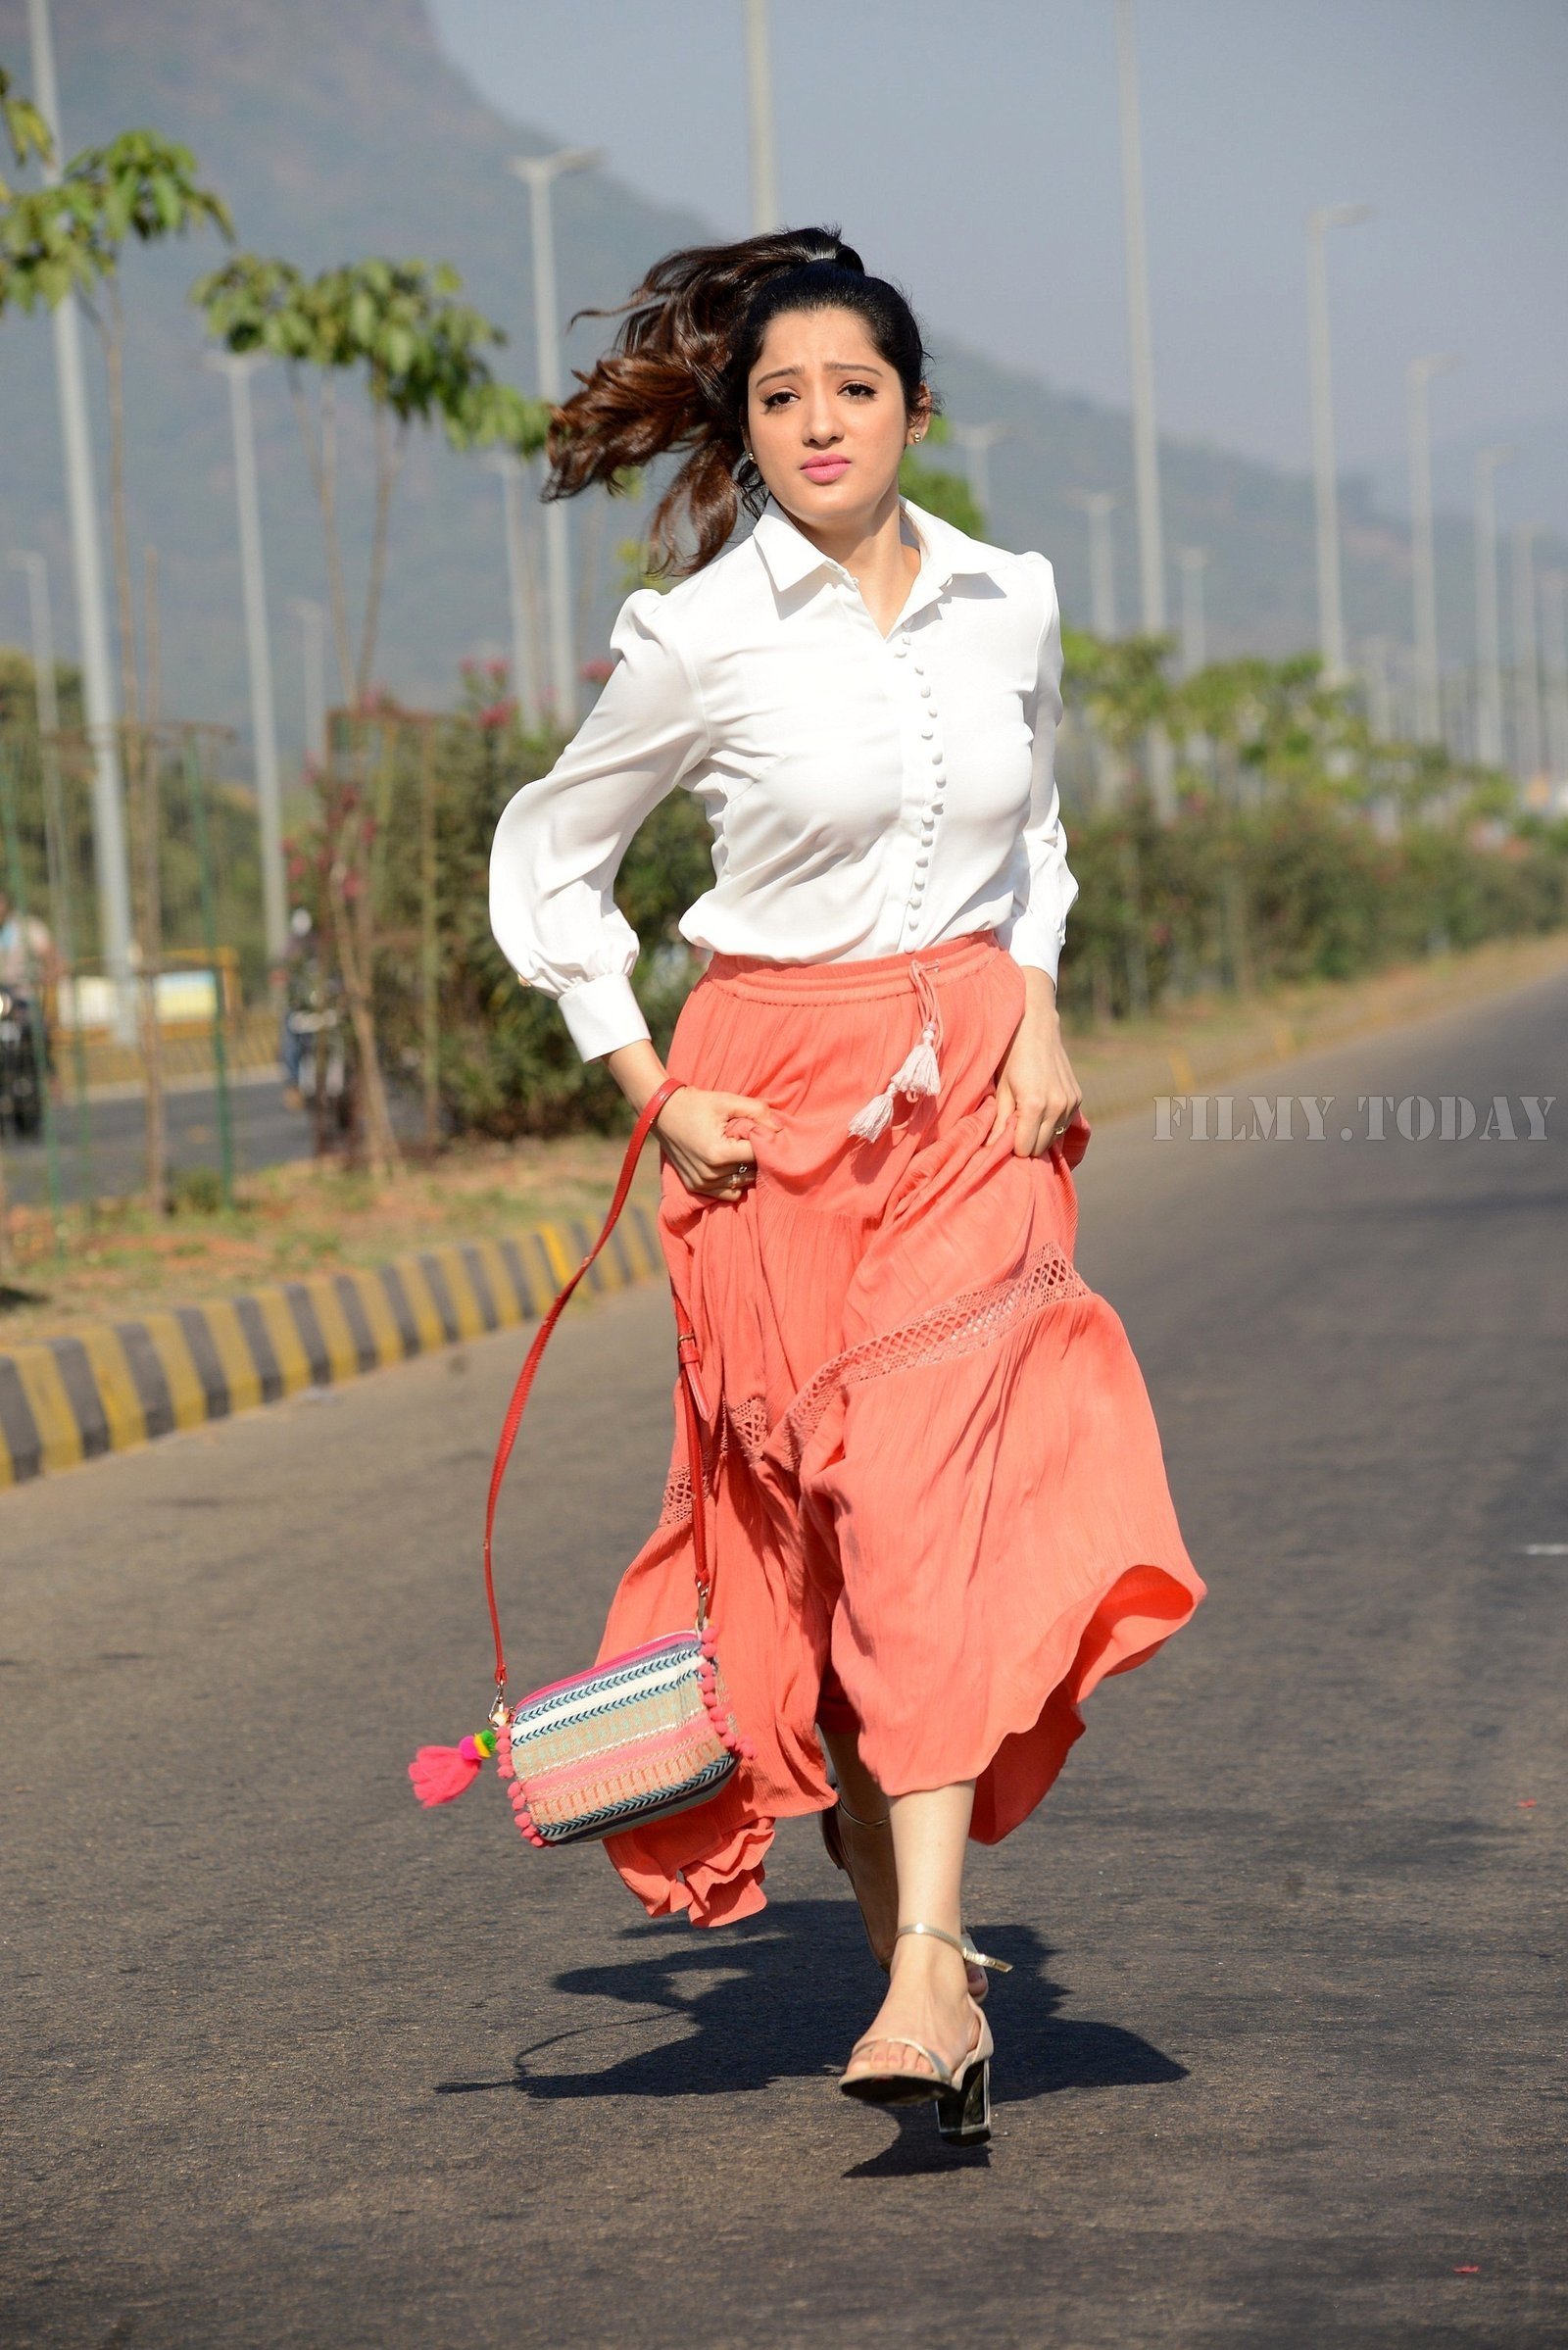 Actress Richa Panai Stills From Brindavanamadi Andaridi | Picture 1572847